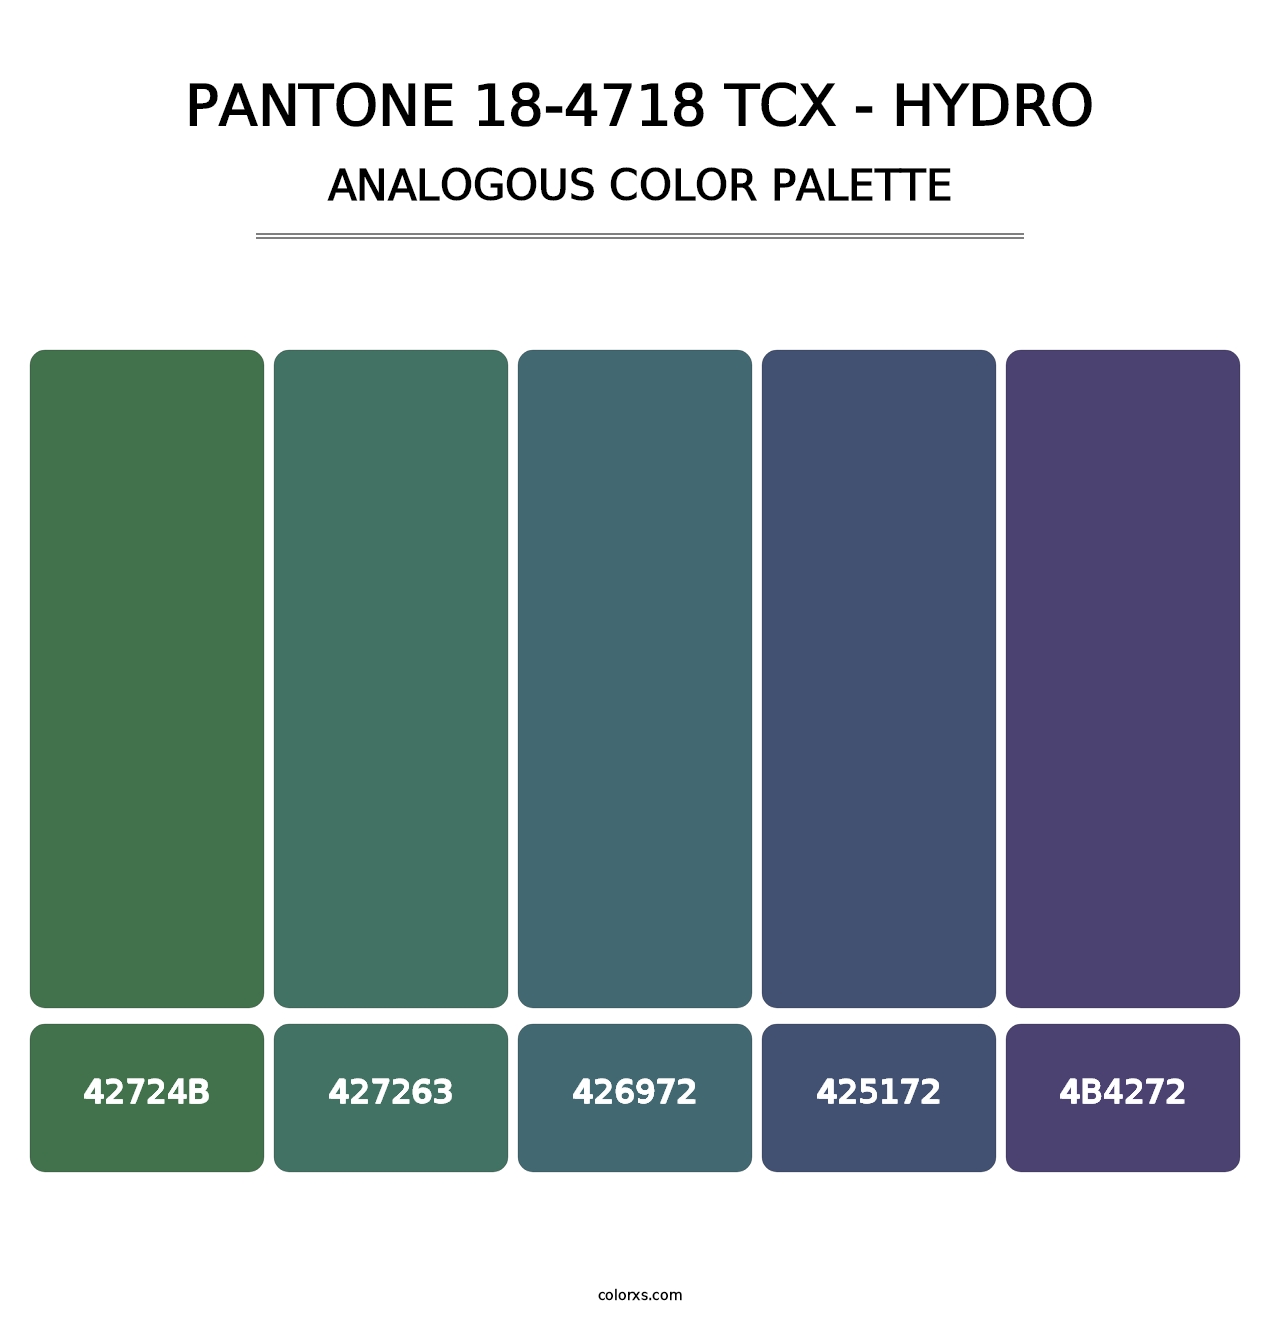 PANTONE 18-4718 TCX - Hydro - Analogous Color Palette